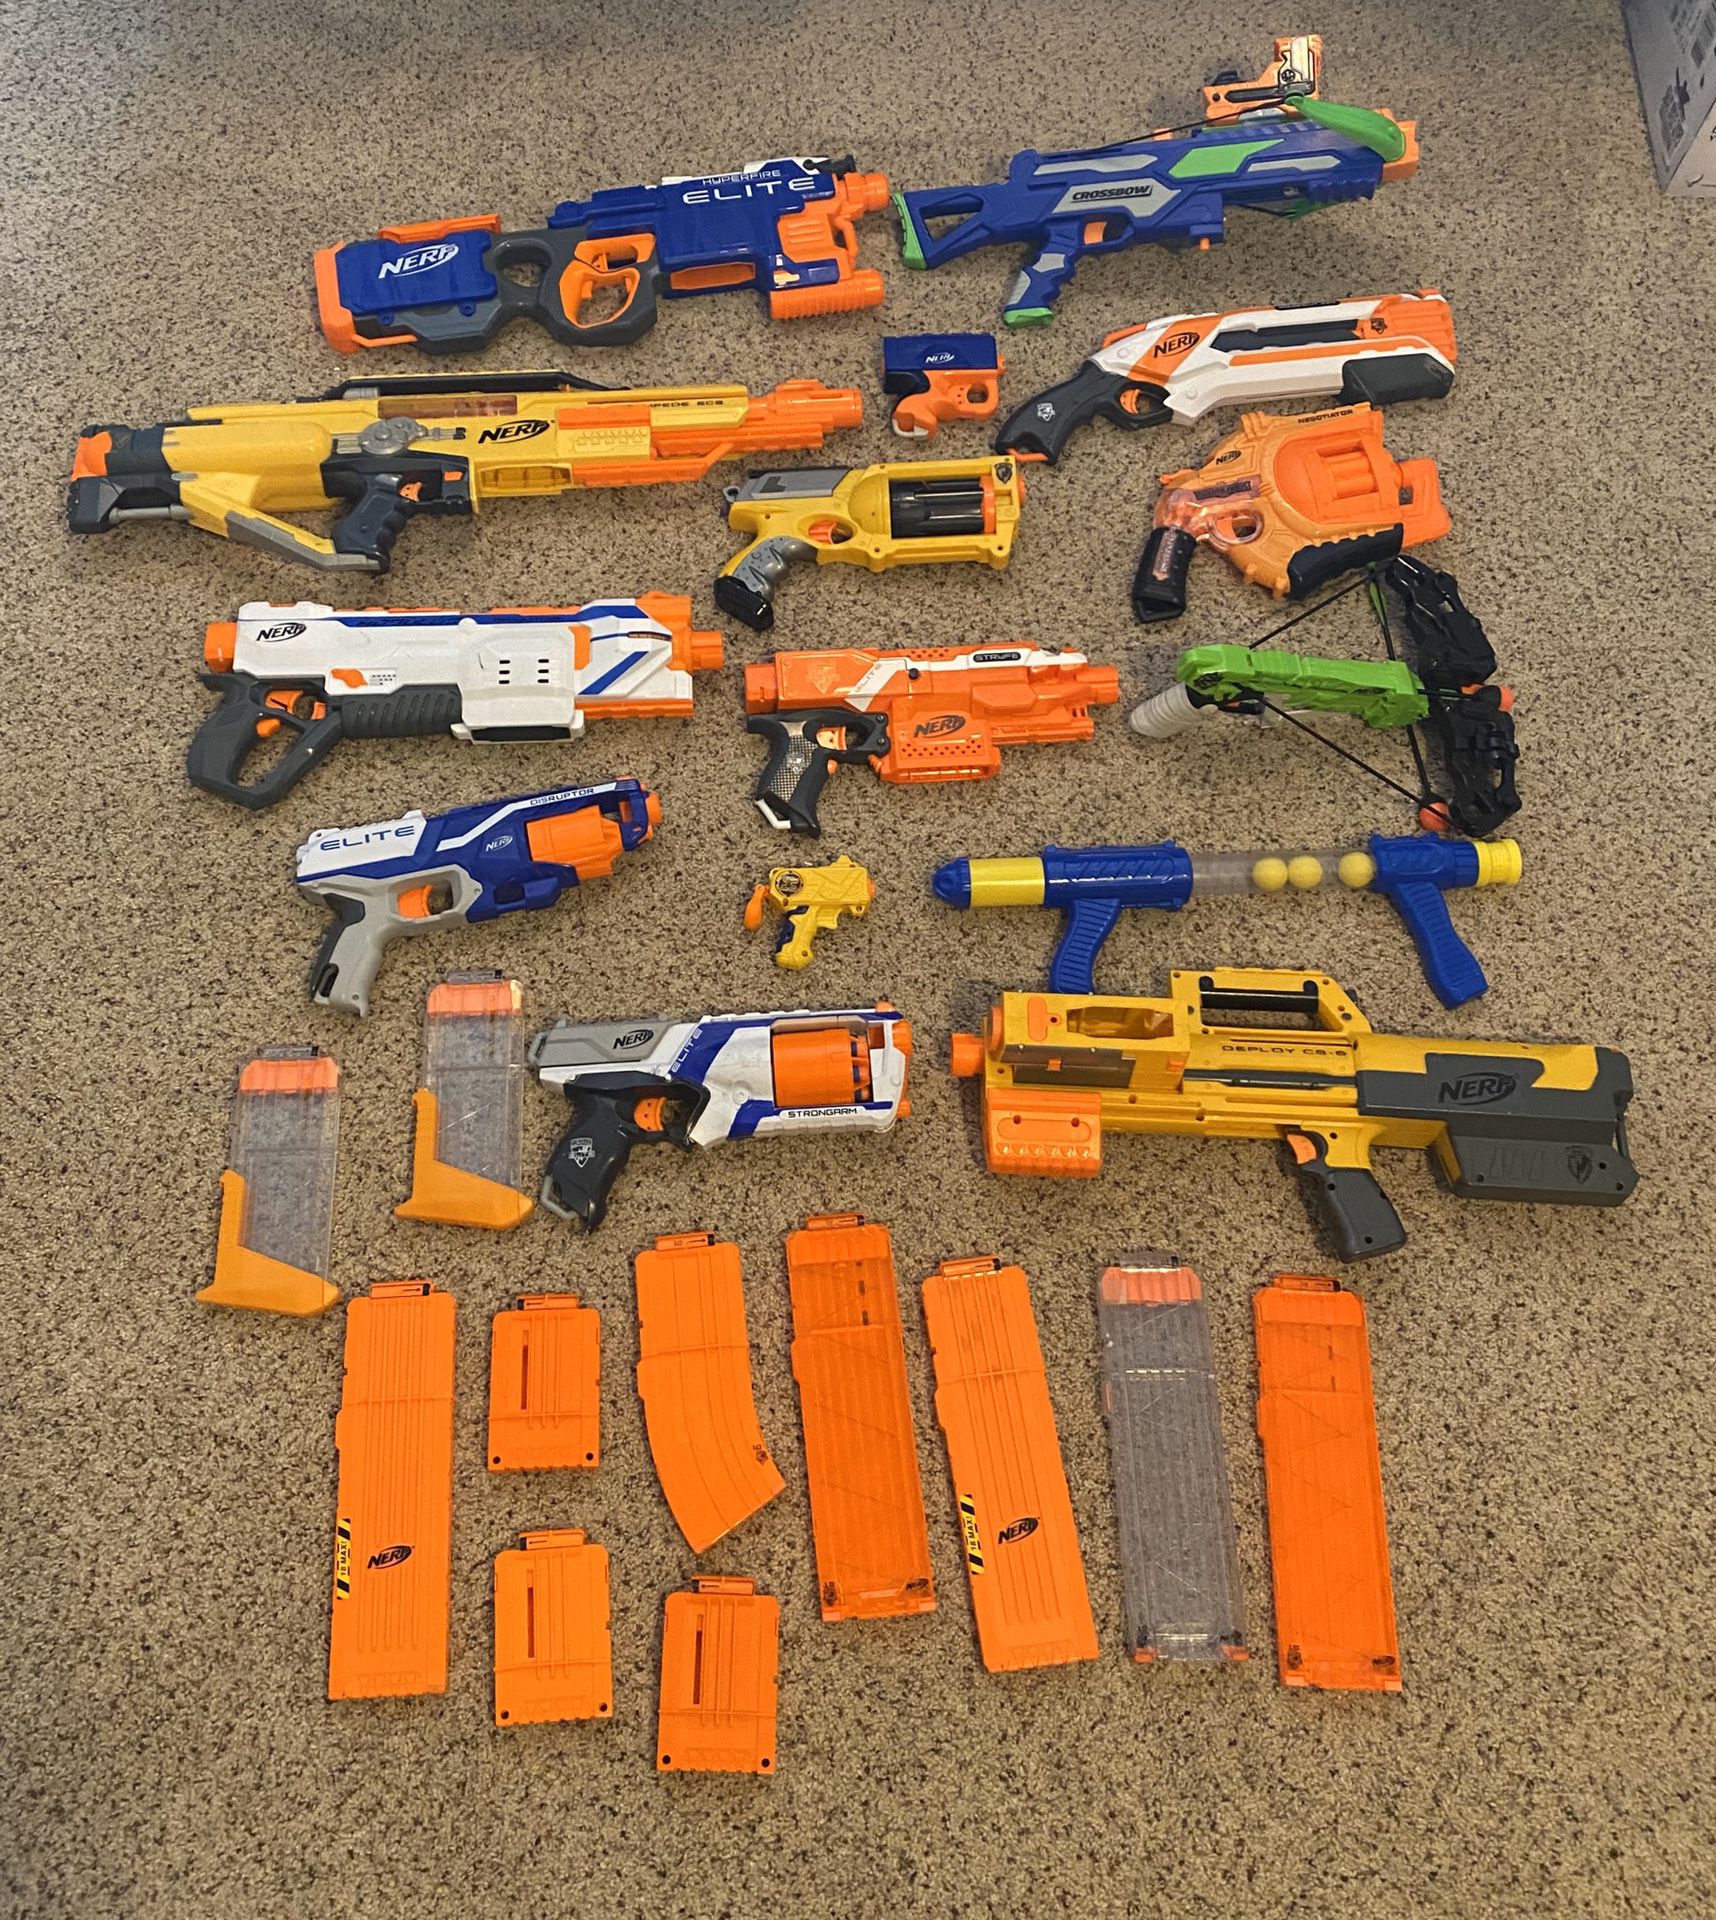 Lot of Nerf Guns